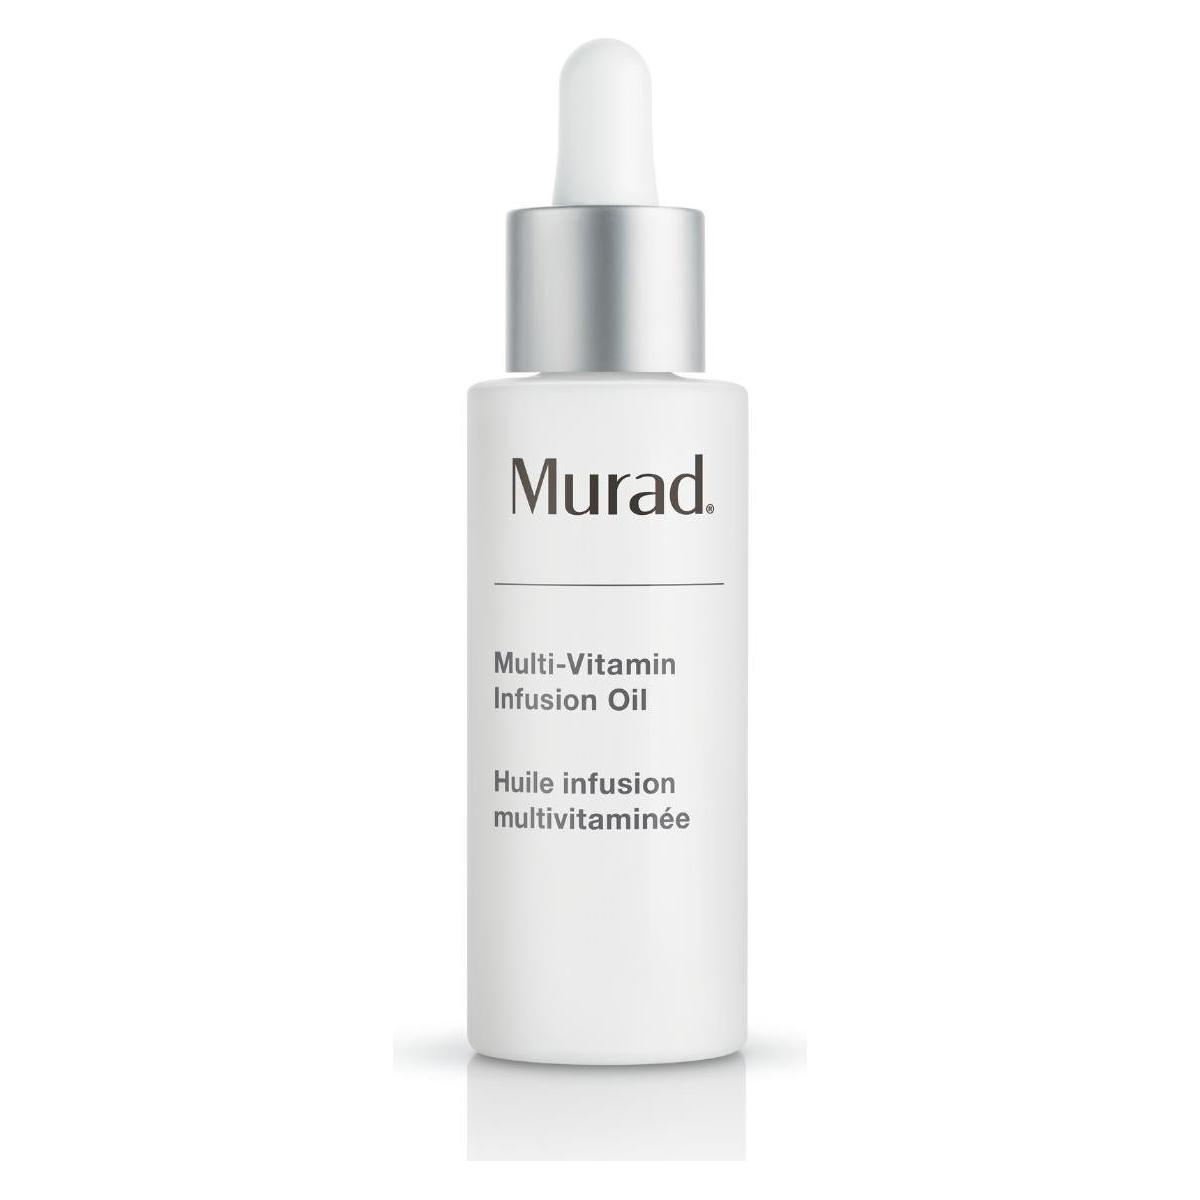 Murad | Multi-Vitamin Infusion Oil - DG International Ventures Limited